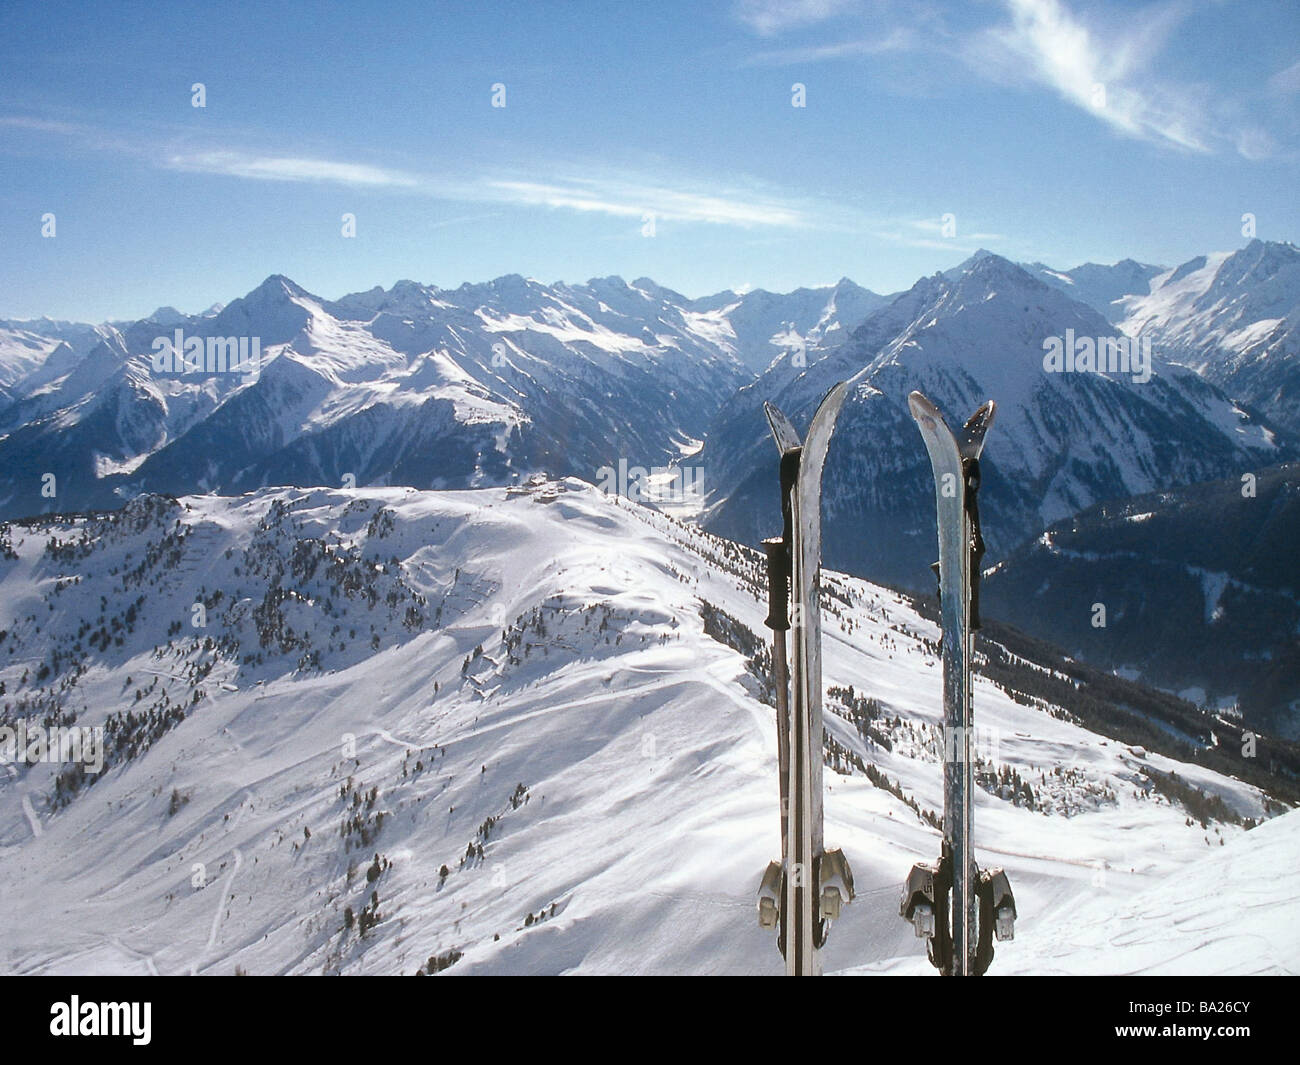 Österreich Hintertux-Skigebiet Ski Skistöcke Alpen-Panorama Nord-Tyrol  Tirol Alpen Berge-Loipe verfolgen Skiausrüstung gestoppt Stockfotografie -  Alamy